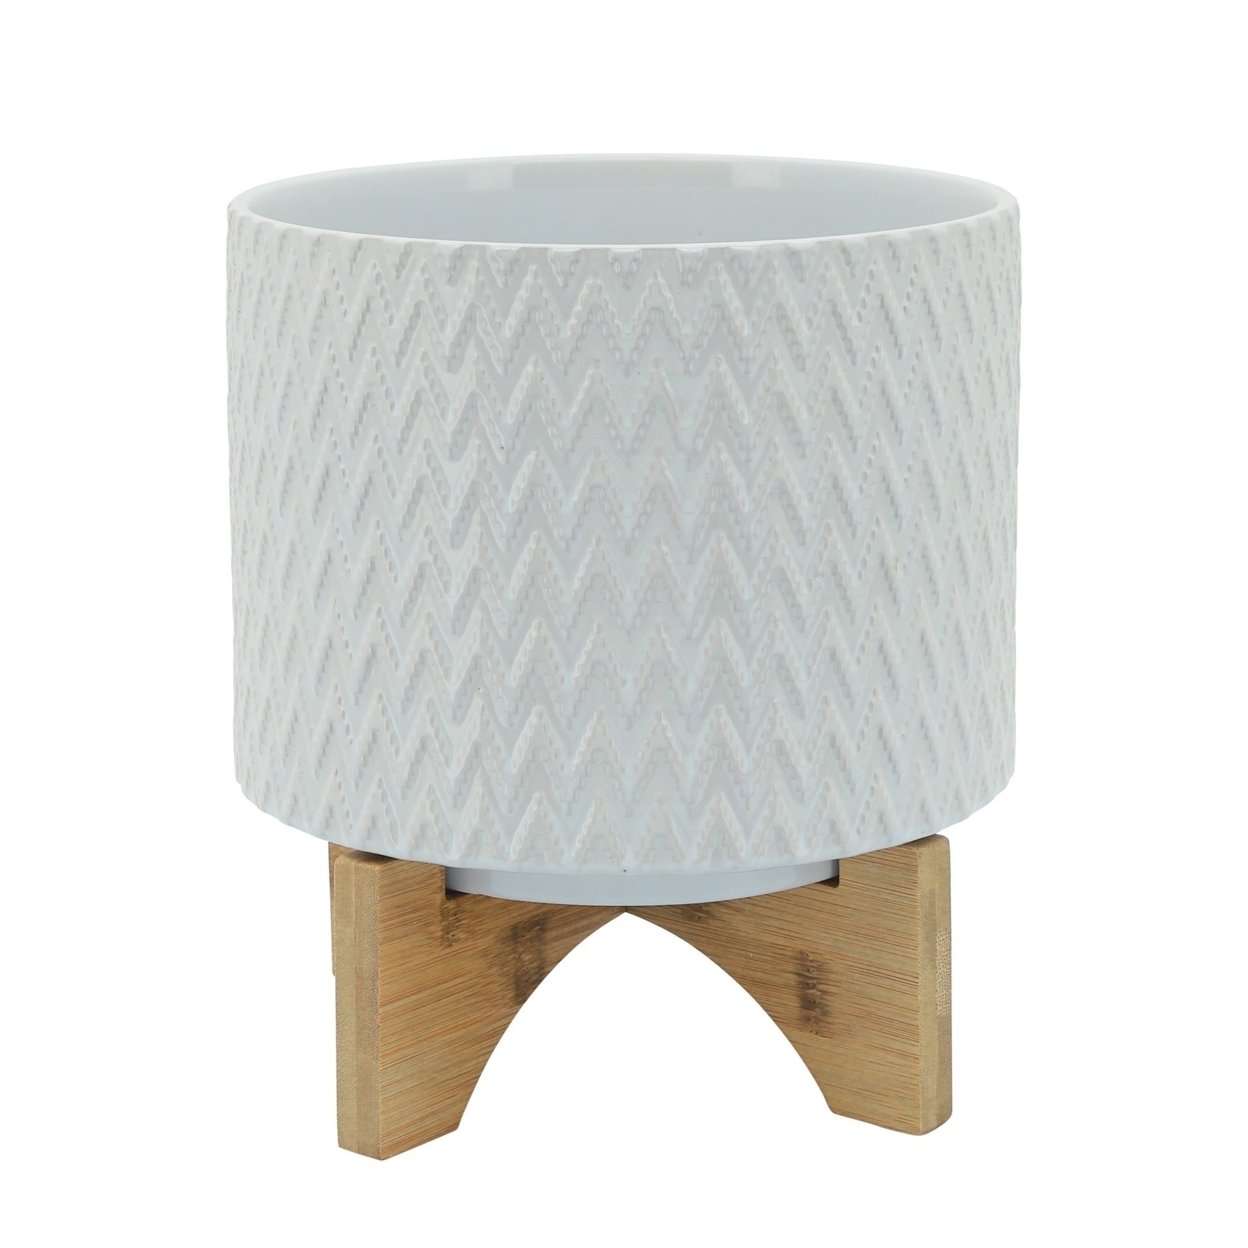 Ceramic Planter With Chevron Pattern And Wooden Stand, Small, White- Saltoro Sherpi